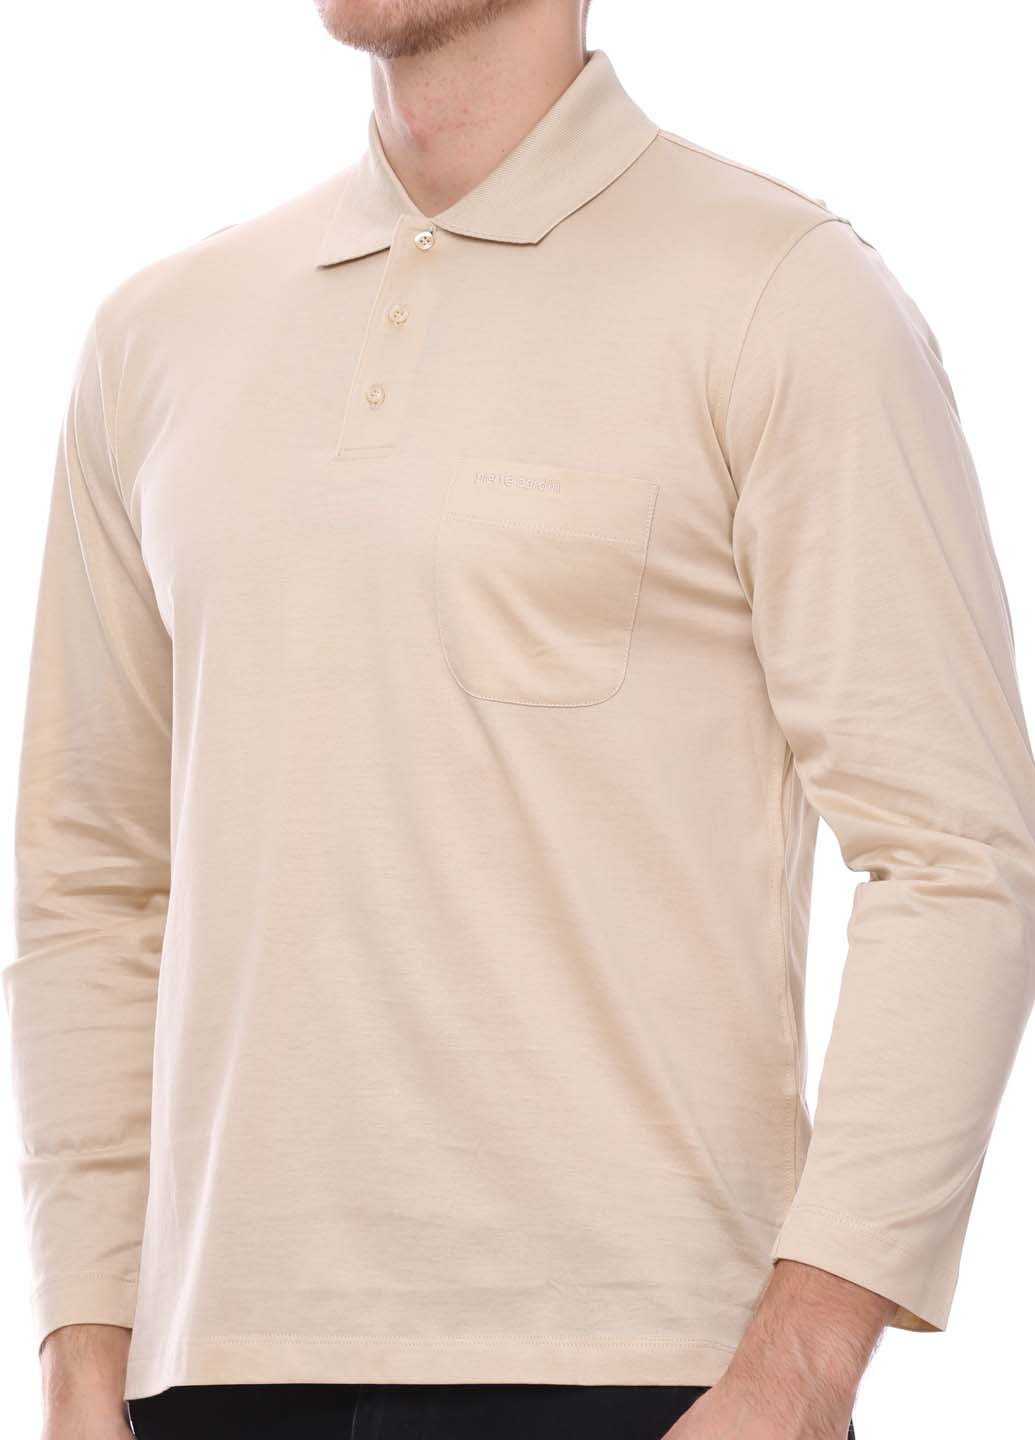 Светло-бежевая футболка-поло для мужчин Pierre Cardin однотонная